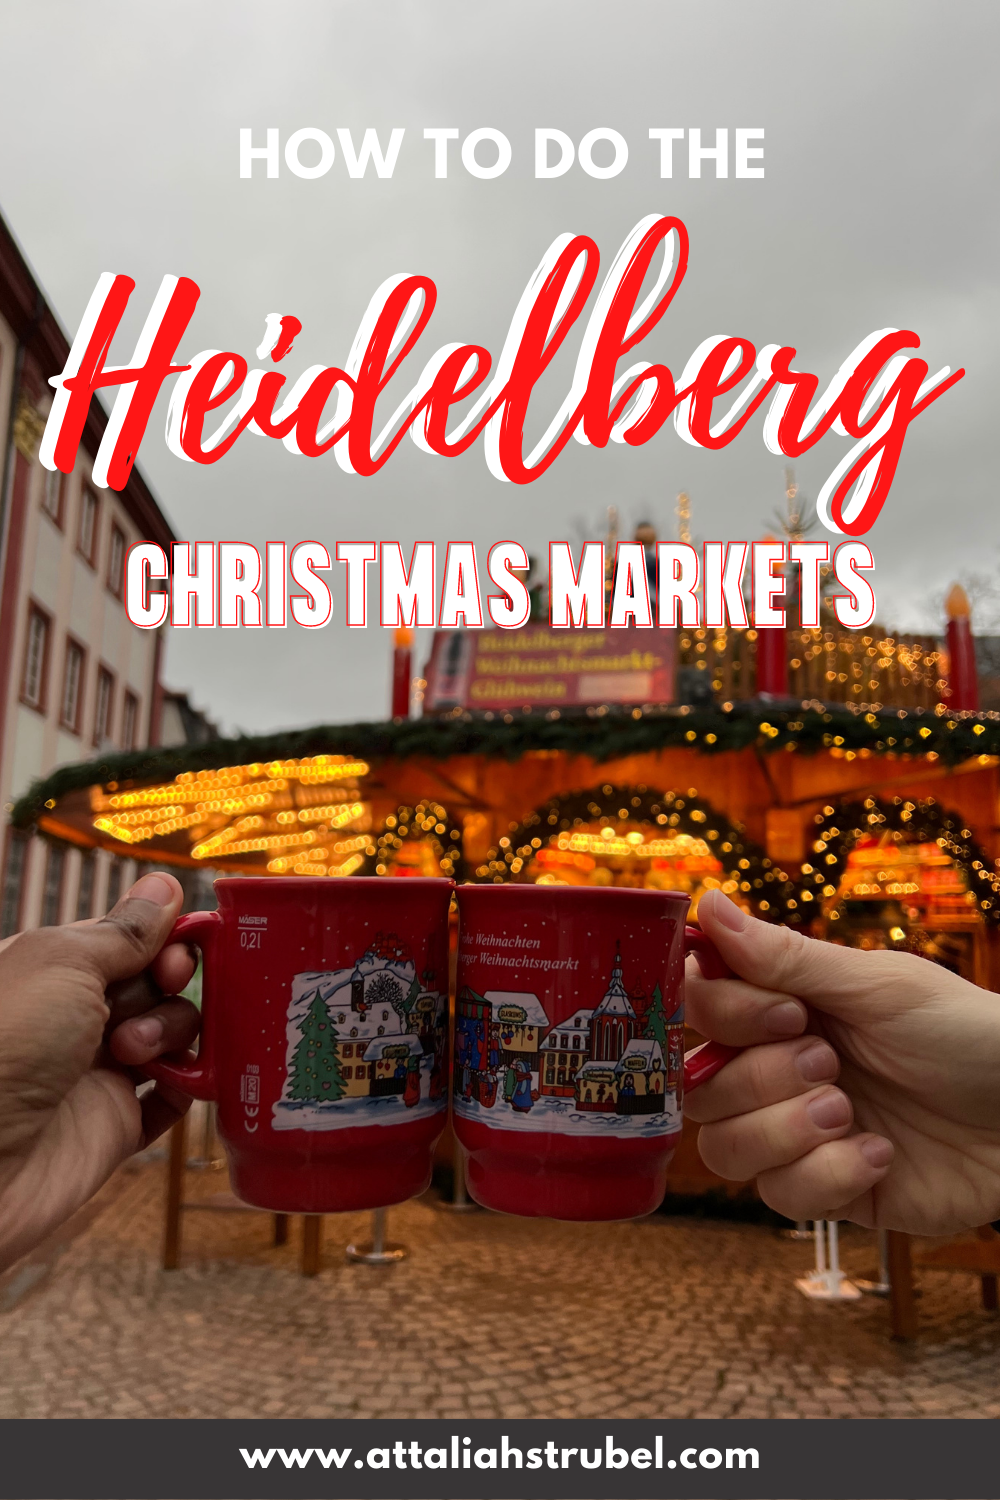 How to do the Heidelberg Christmas Markets